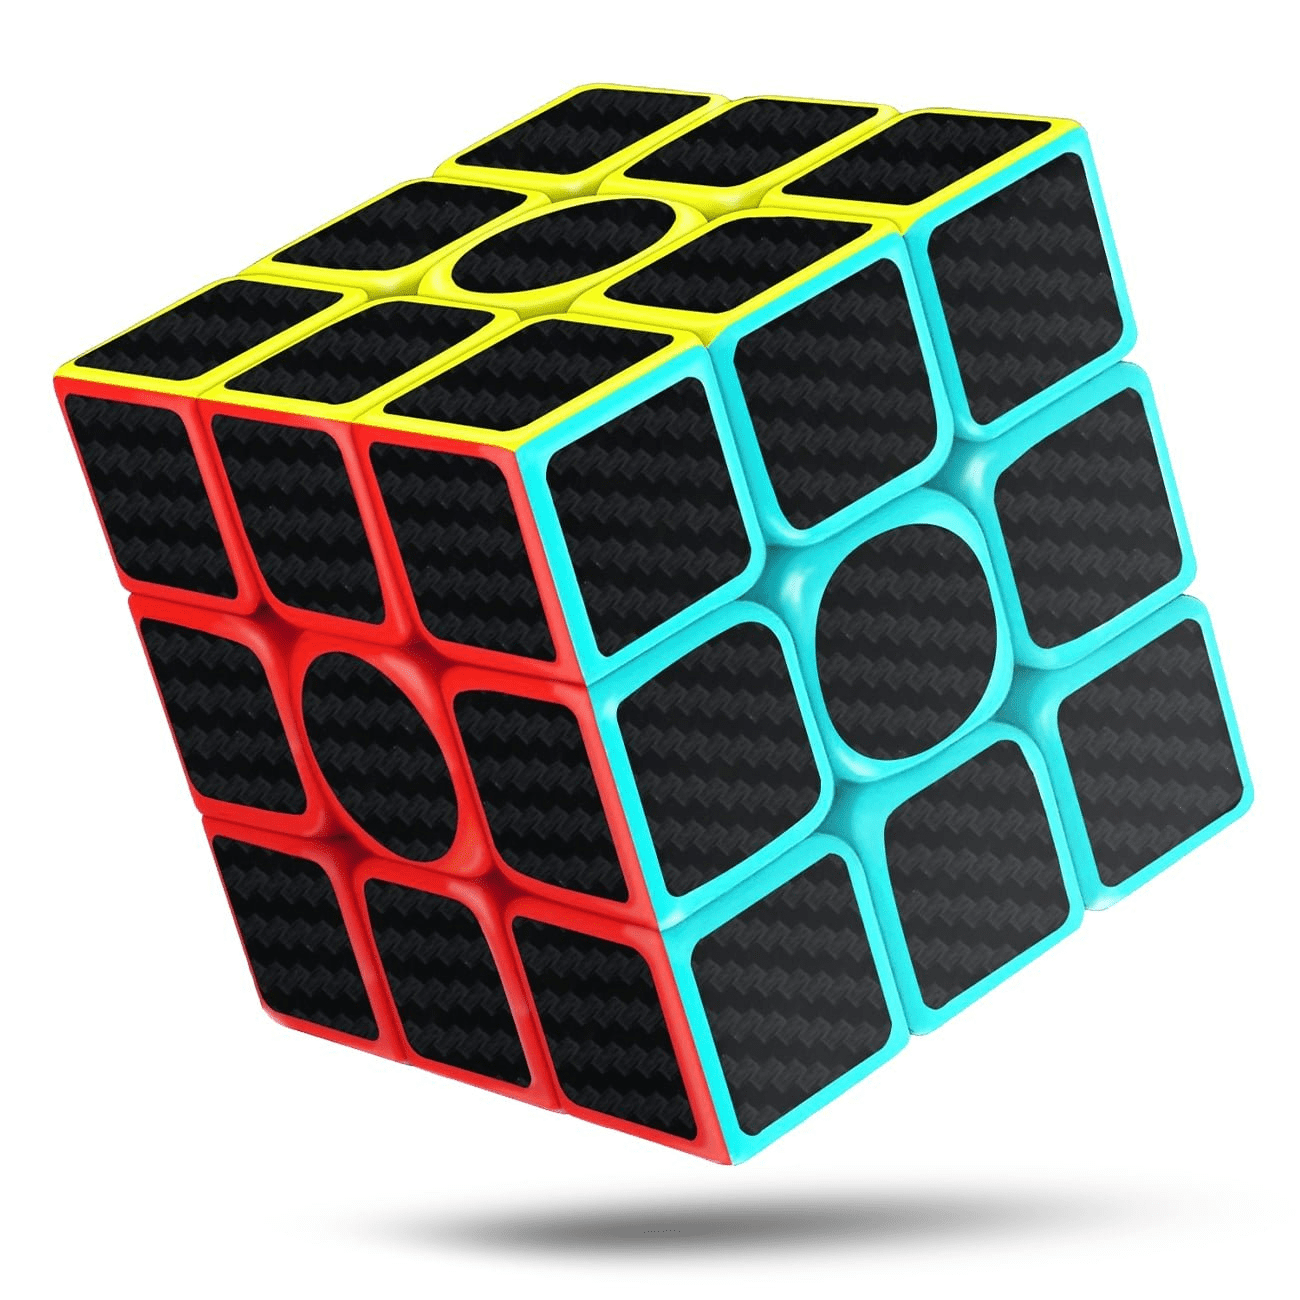 UK 3 X 3 Stickerless Speed Magic Cube Kids Adults Fun Puzzle Toys Mind Game 